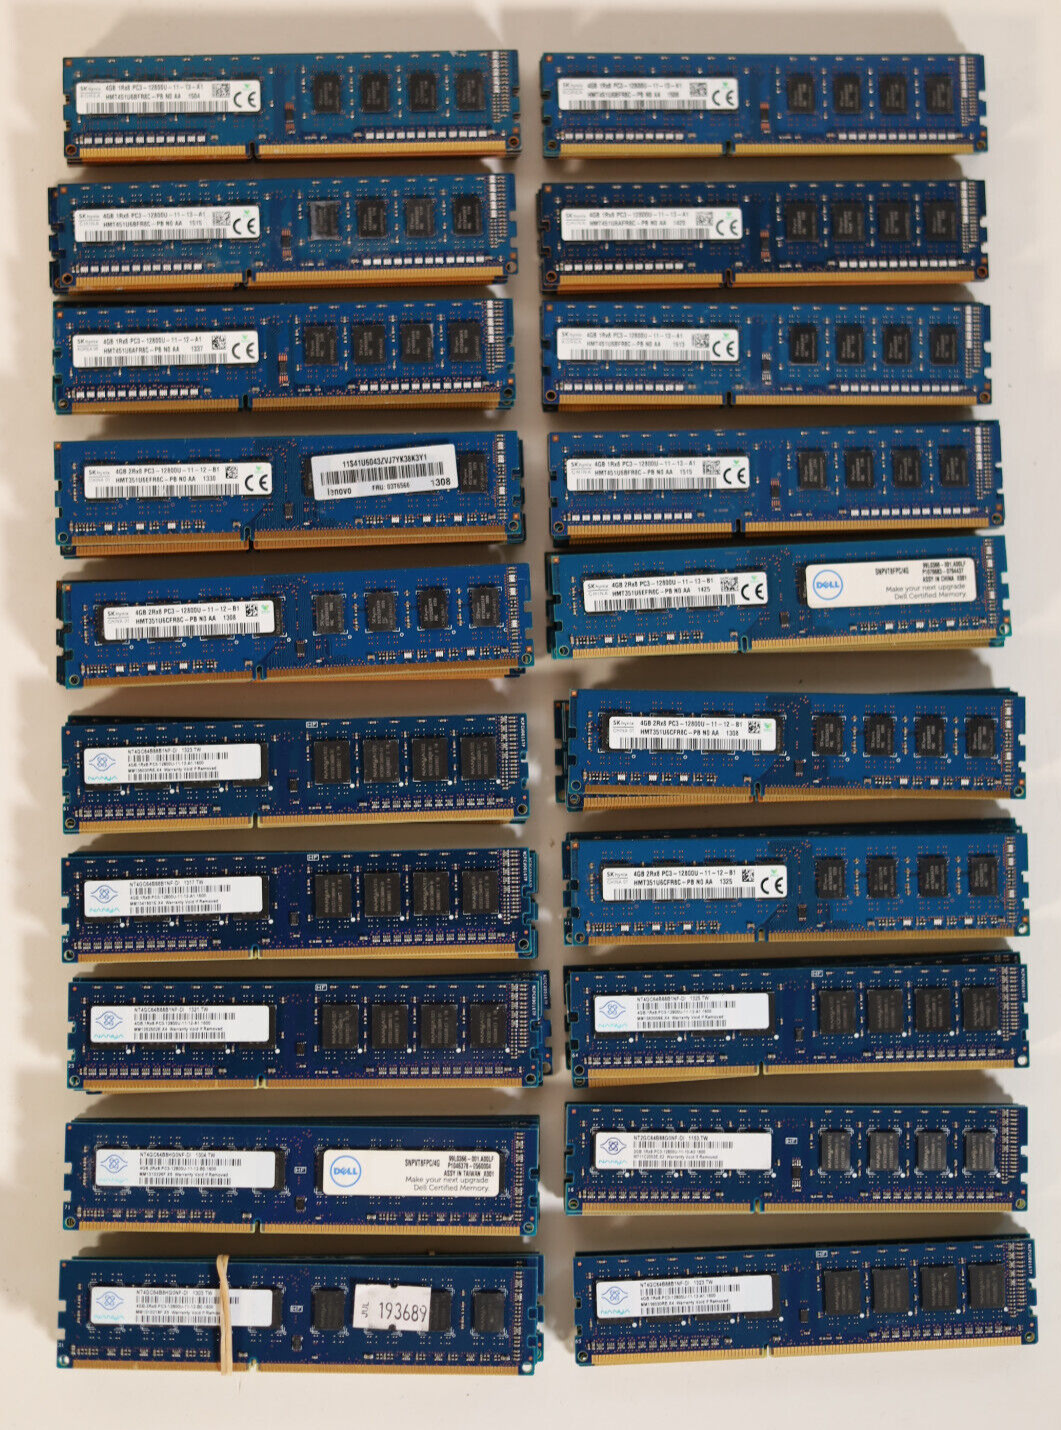 Lot of 100 Sticks - 4GB DDR3 PC3 12800U  Desktop Memory - SK Hynix & Nanya Brand